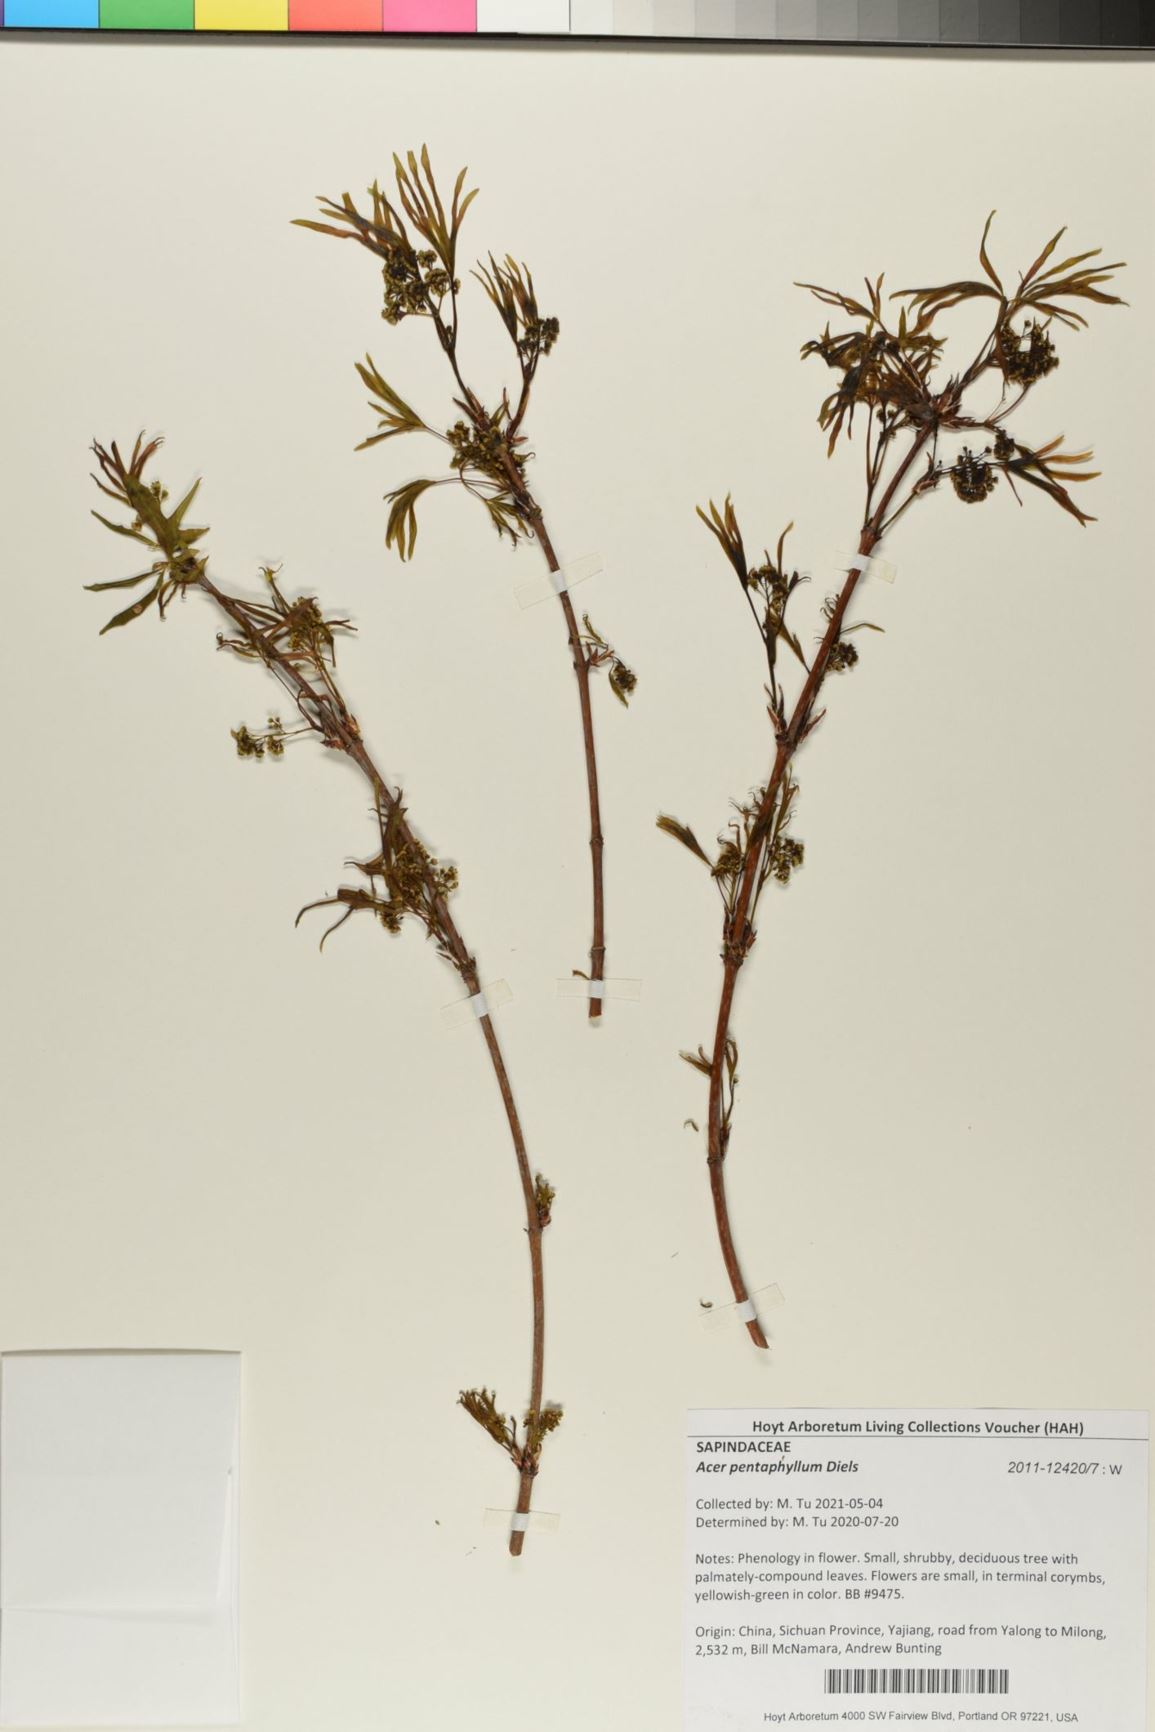 Acer pentaphyllum - five-lobed maple